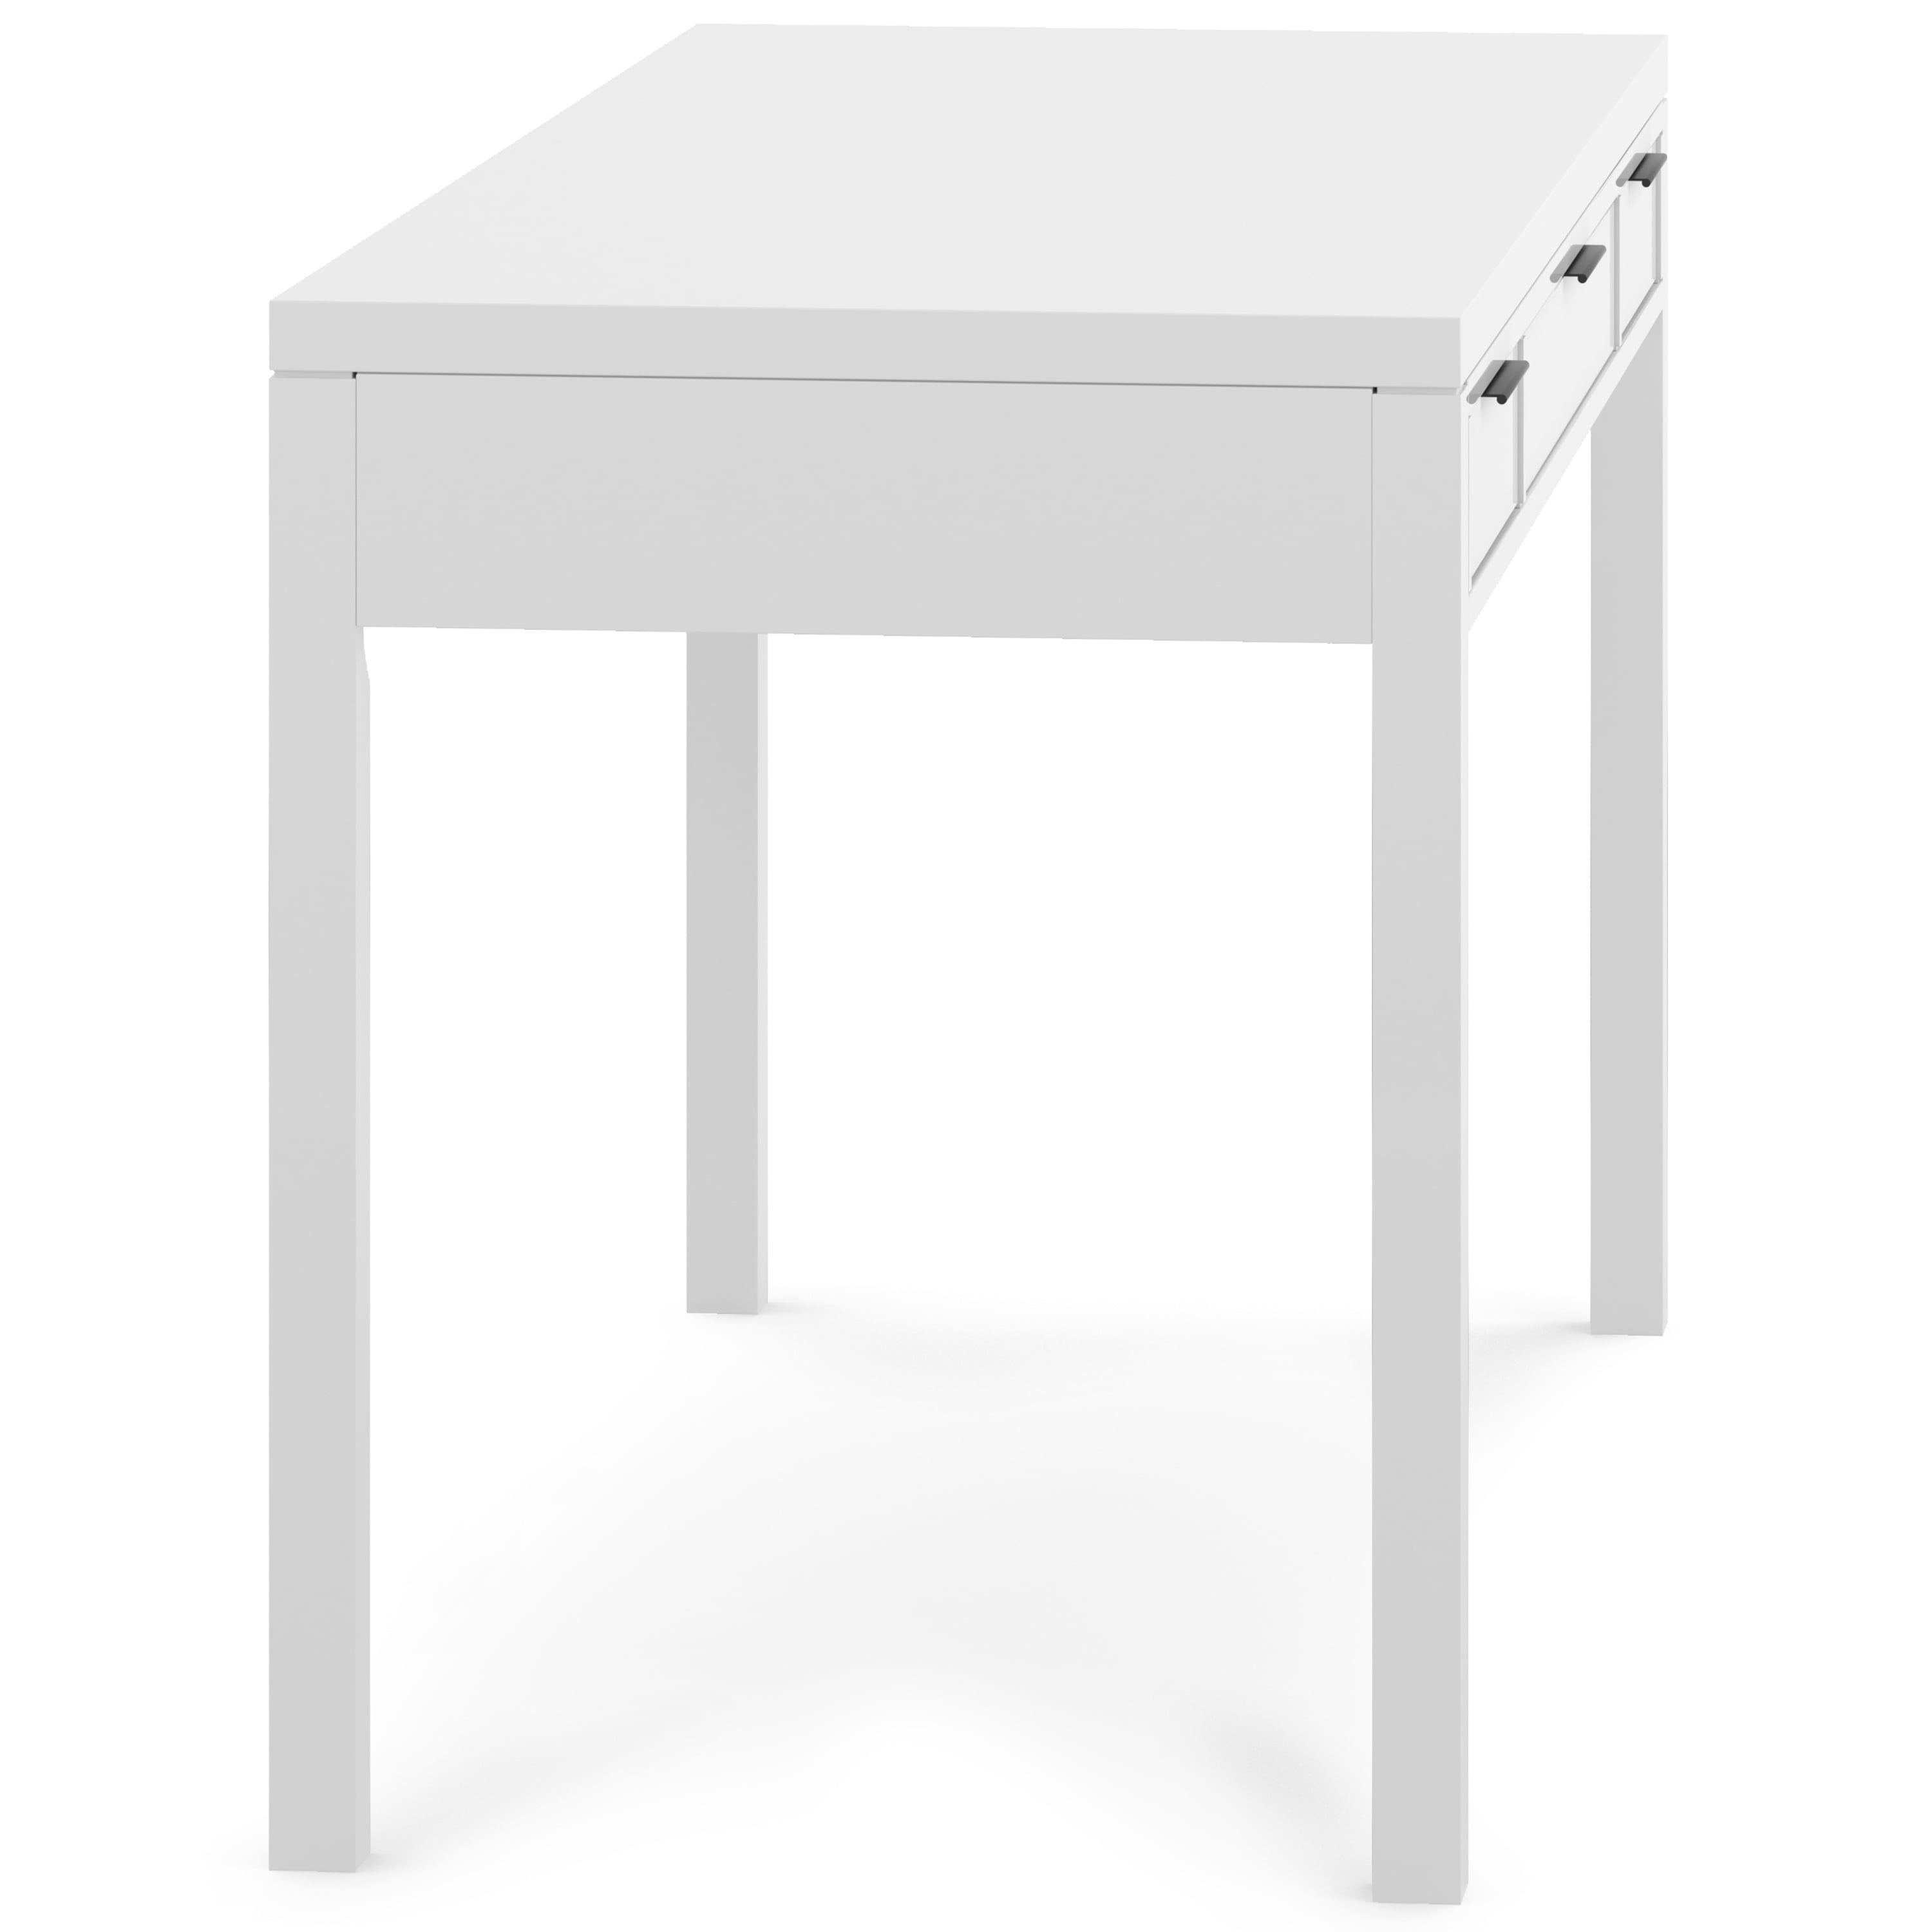 Hollander SOLID WOOD Contemporary 60 inch Wide Desk in Medium Saddle Brown